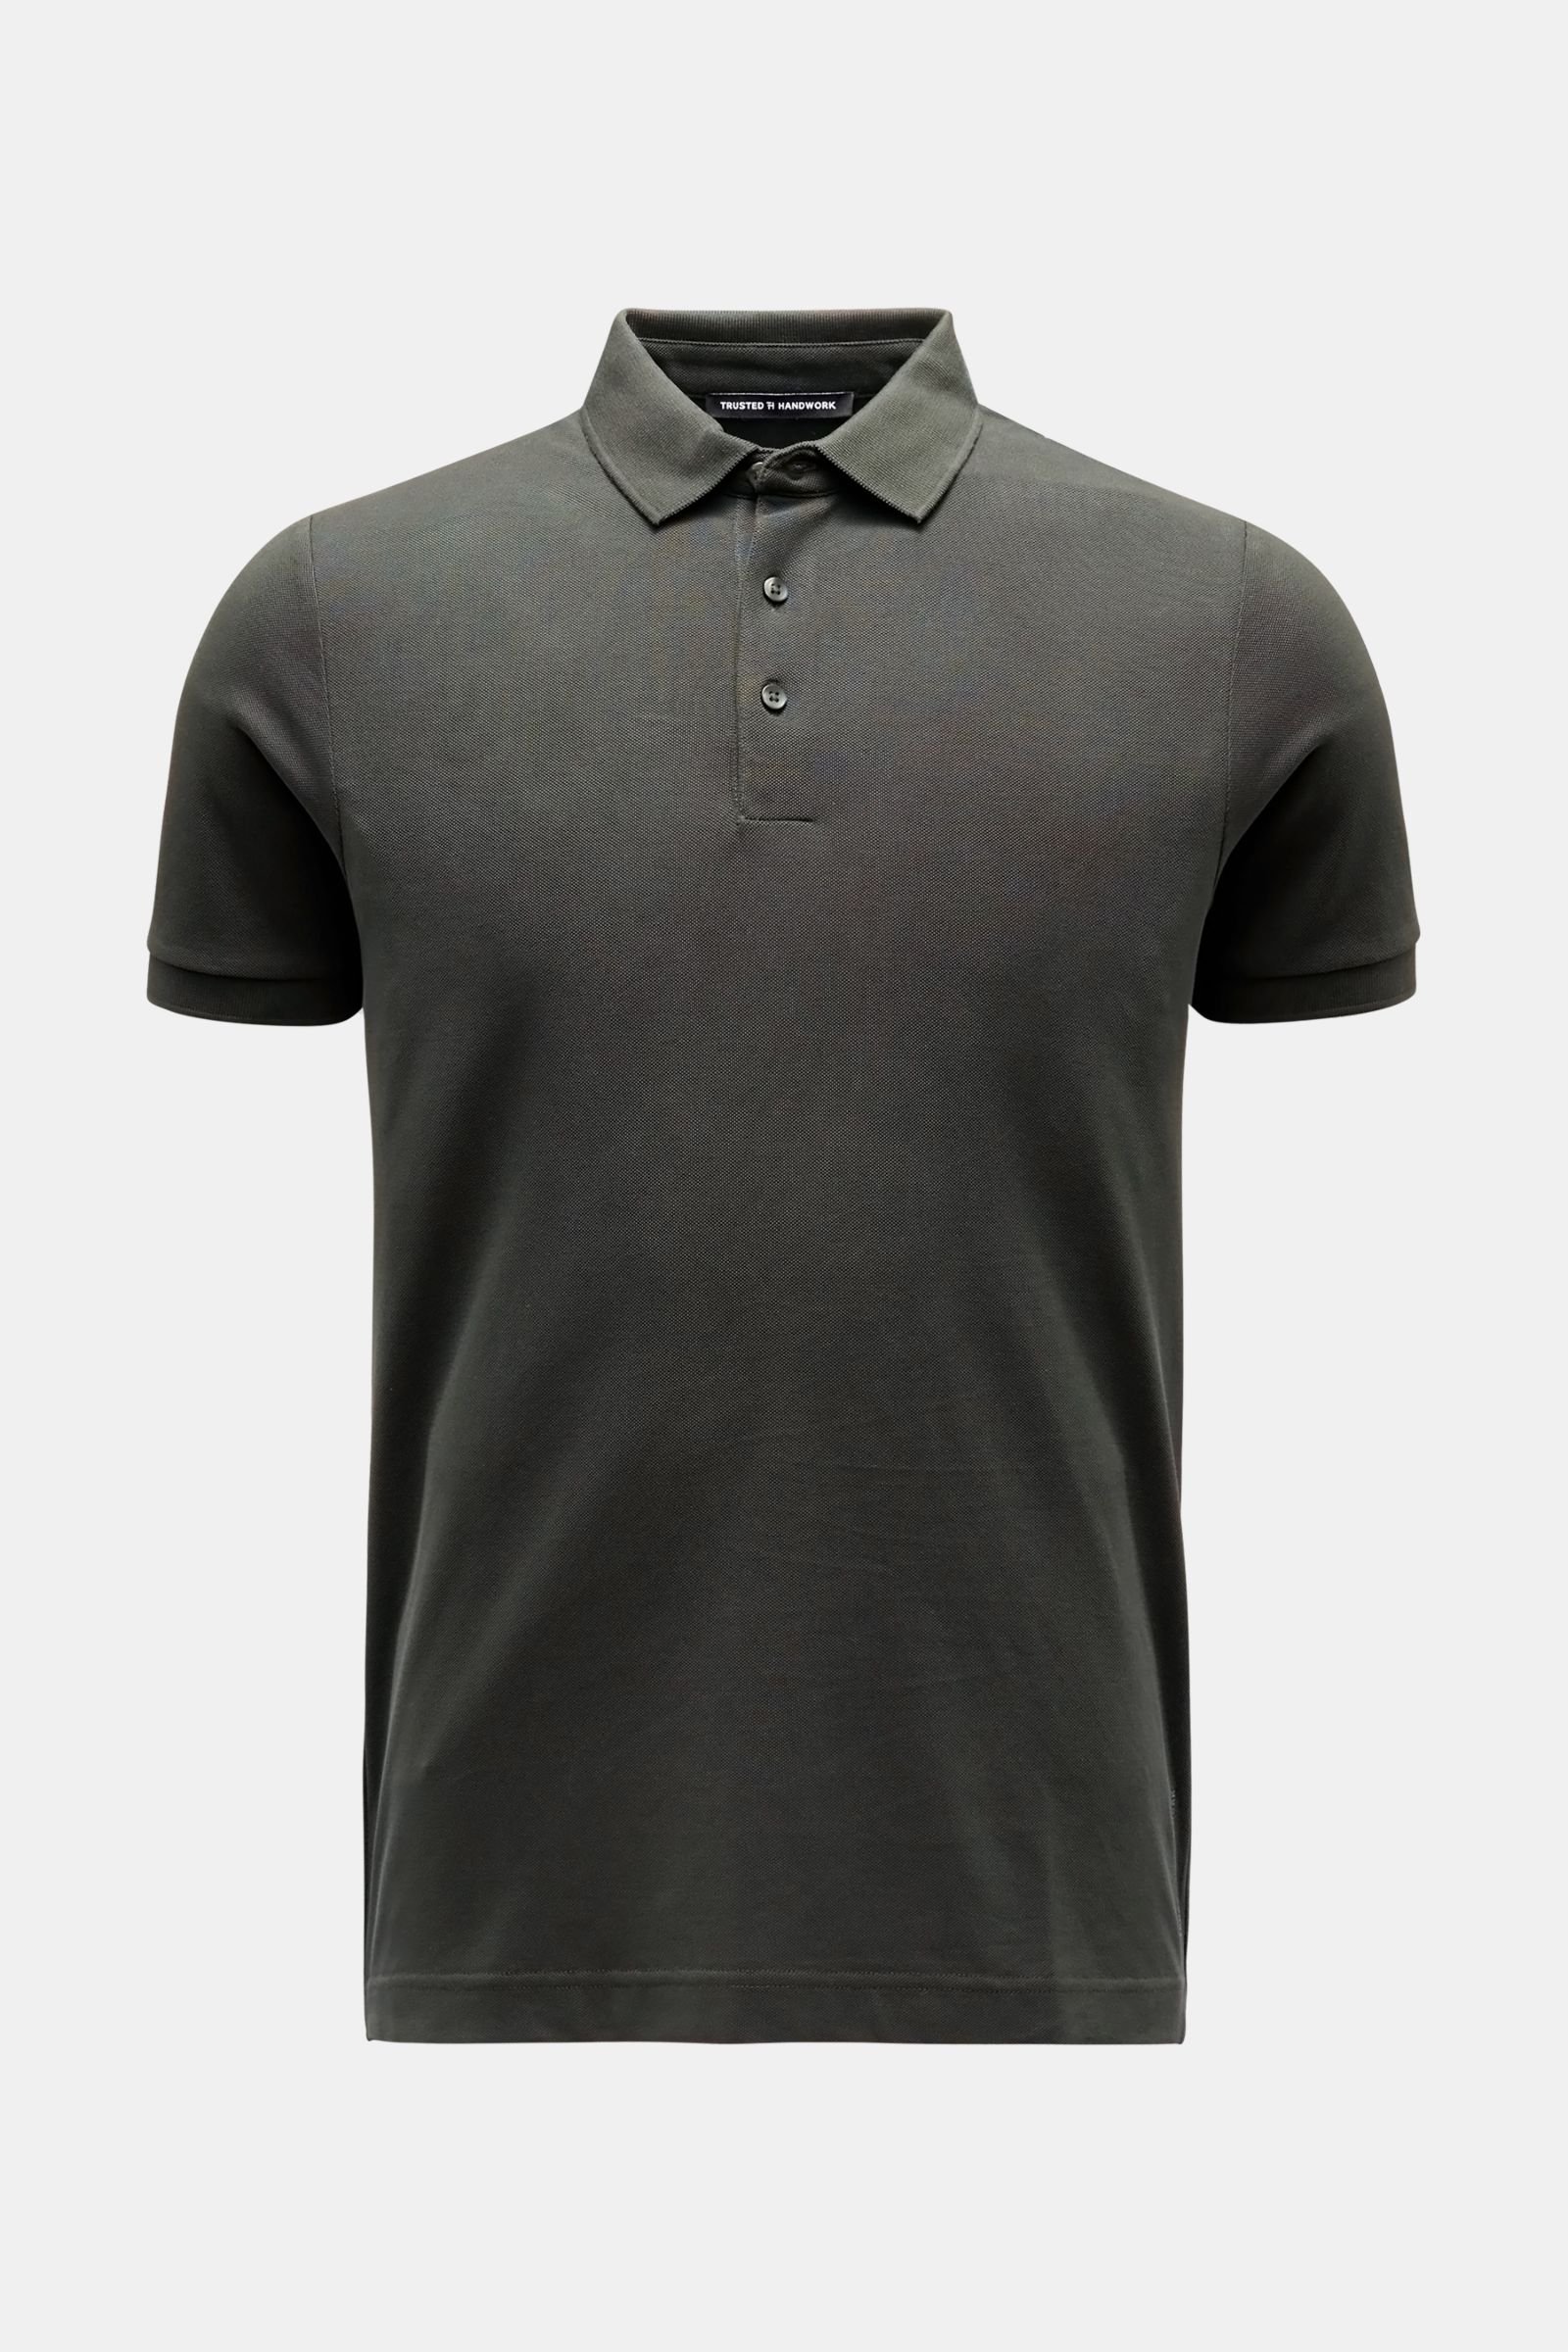 Polo shirt dark olive